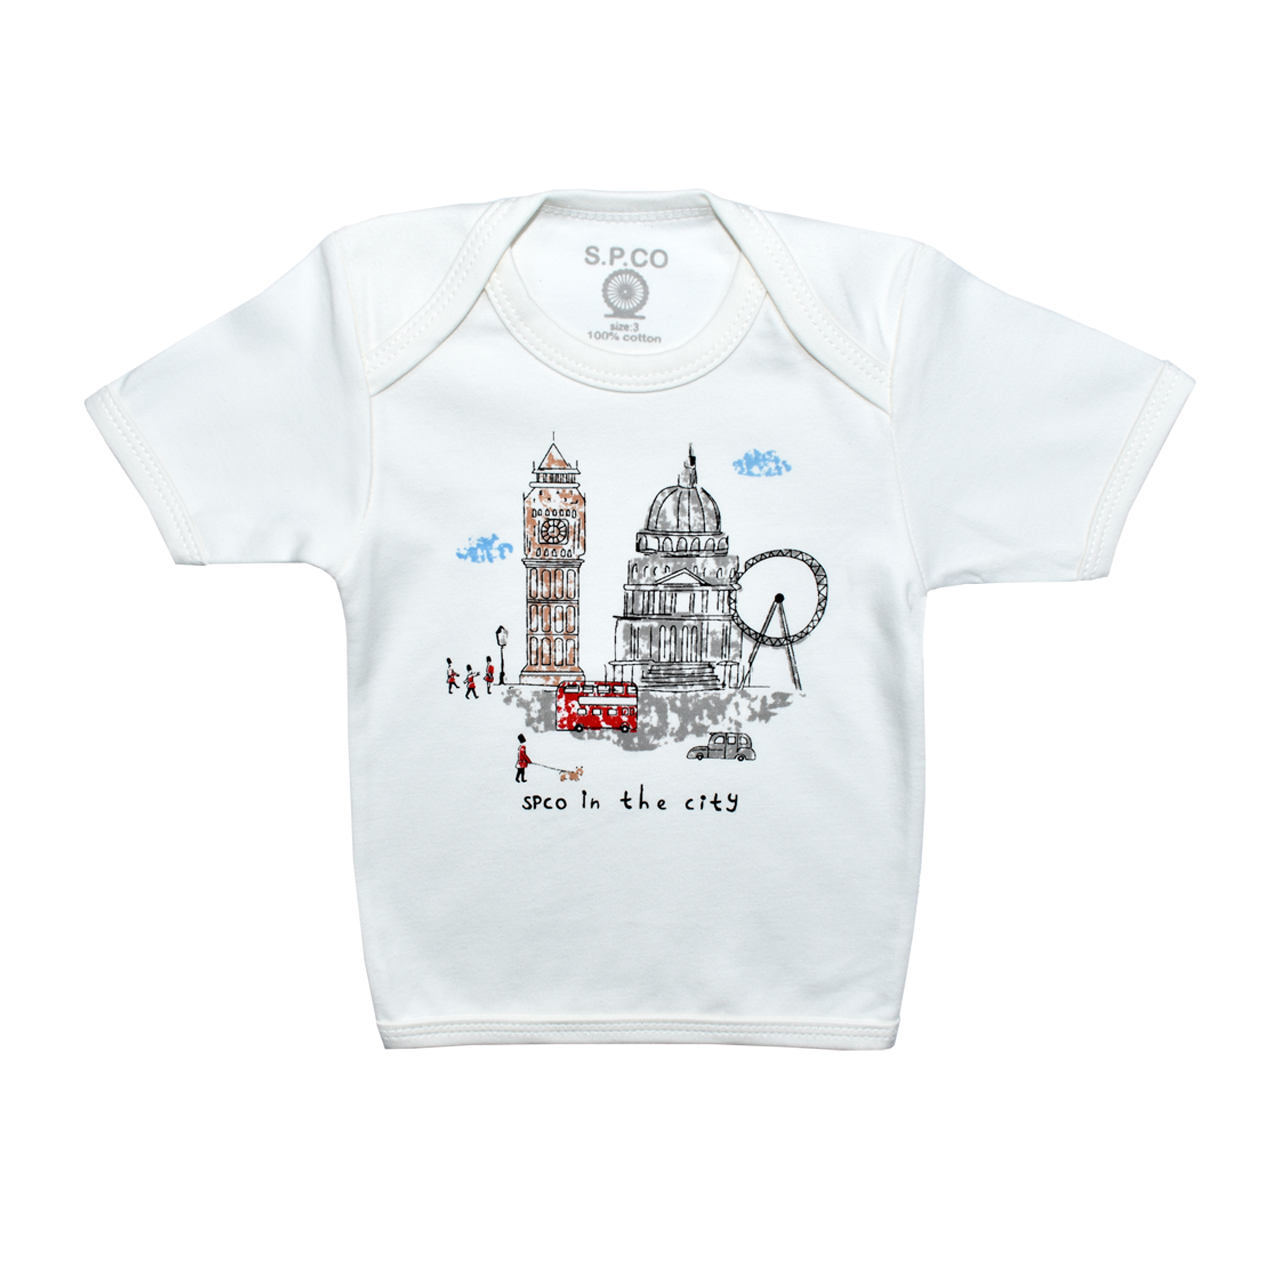 تی شرت آستین کوتاه نوزادی اسپیکو کد 301 -1 -  - 2